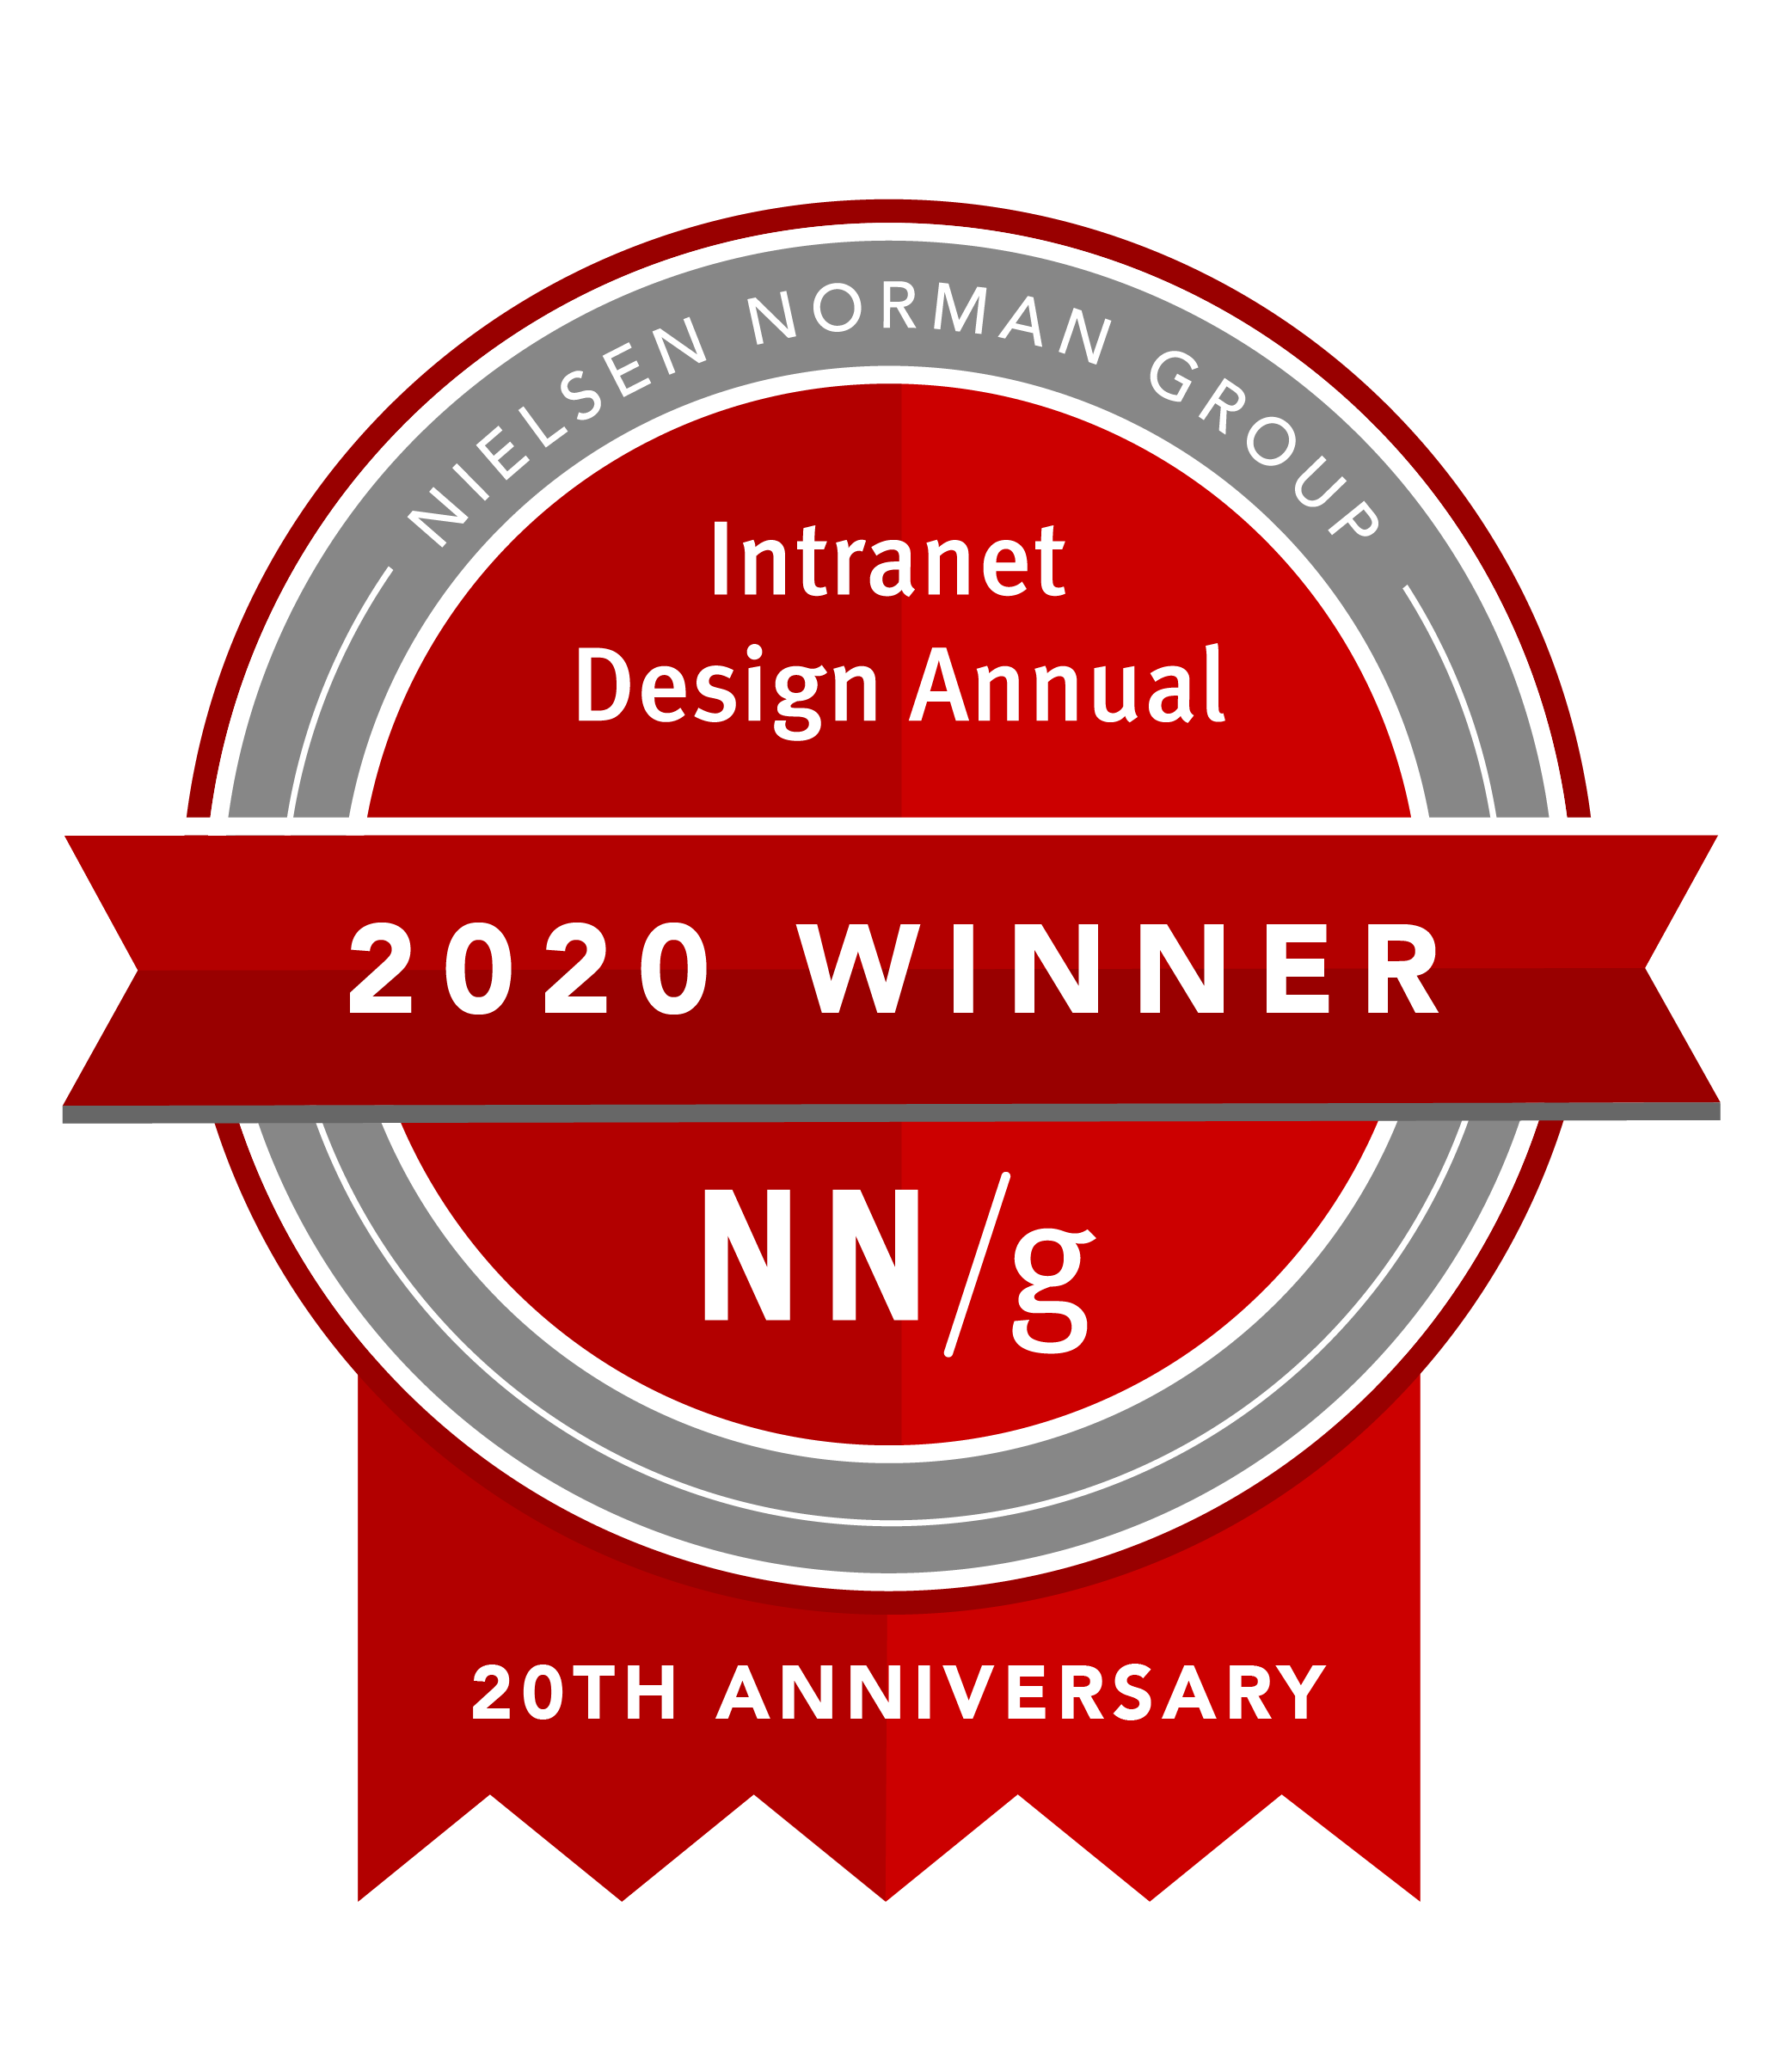 ​ Red, round badge: Nielsen Norman Group Intranet Design Annual 2020 Winner NN/g logo, 20th Anniversary